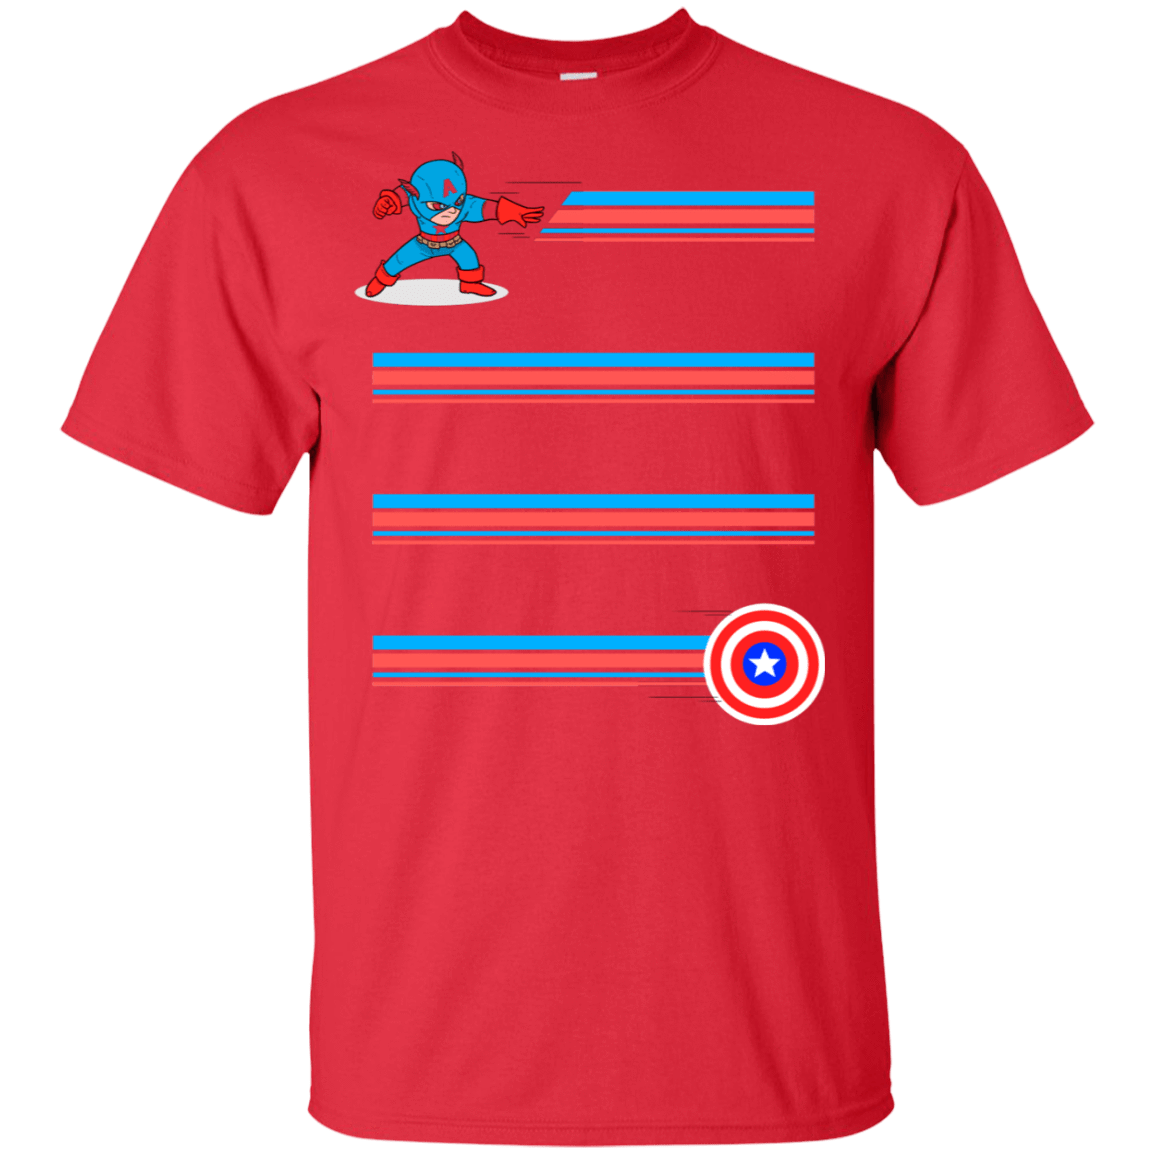 T-Shirts Red / S Line Captain T-Shirt